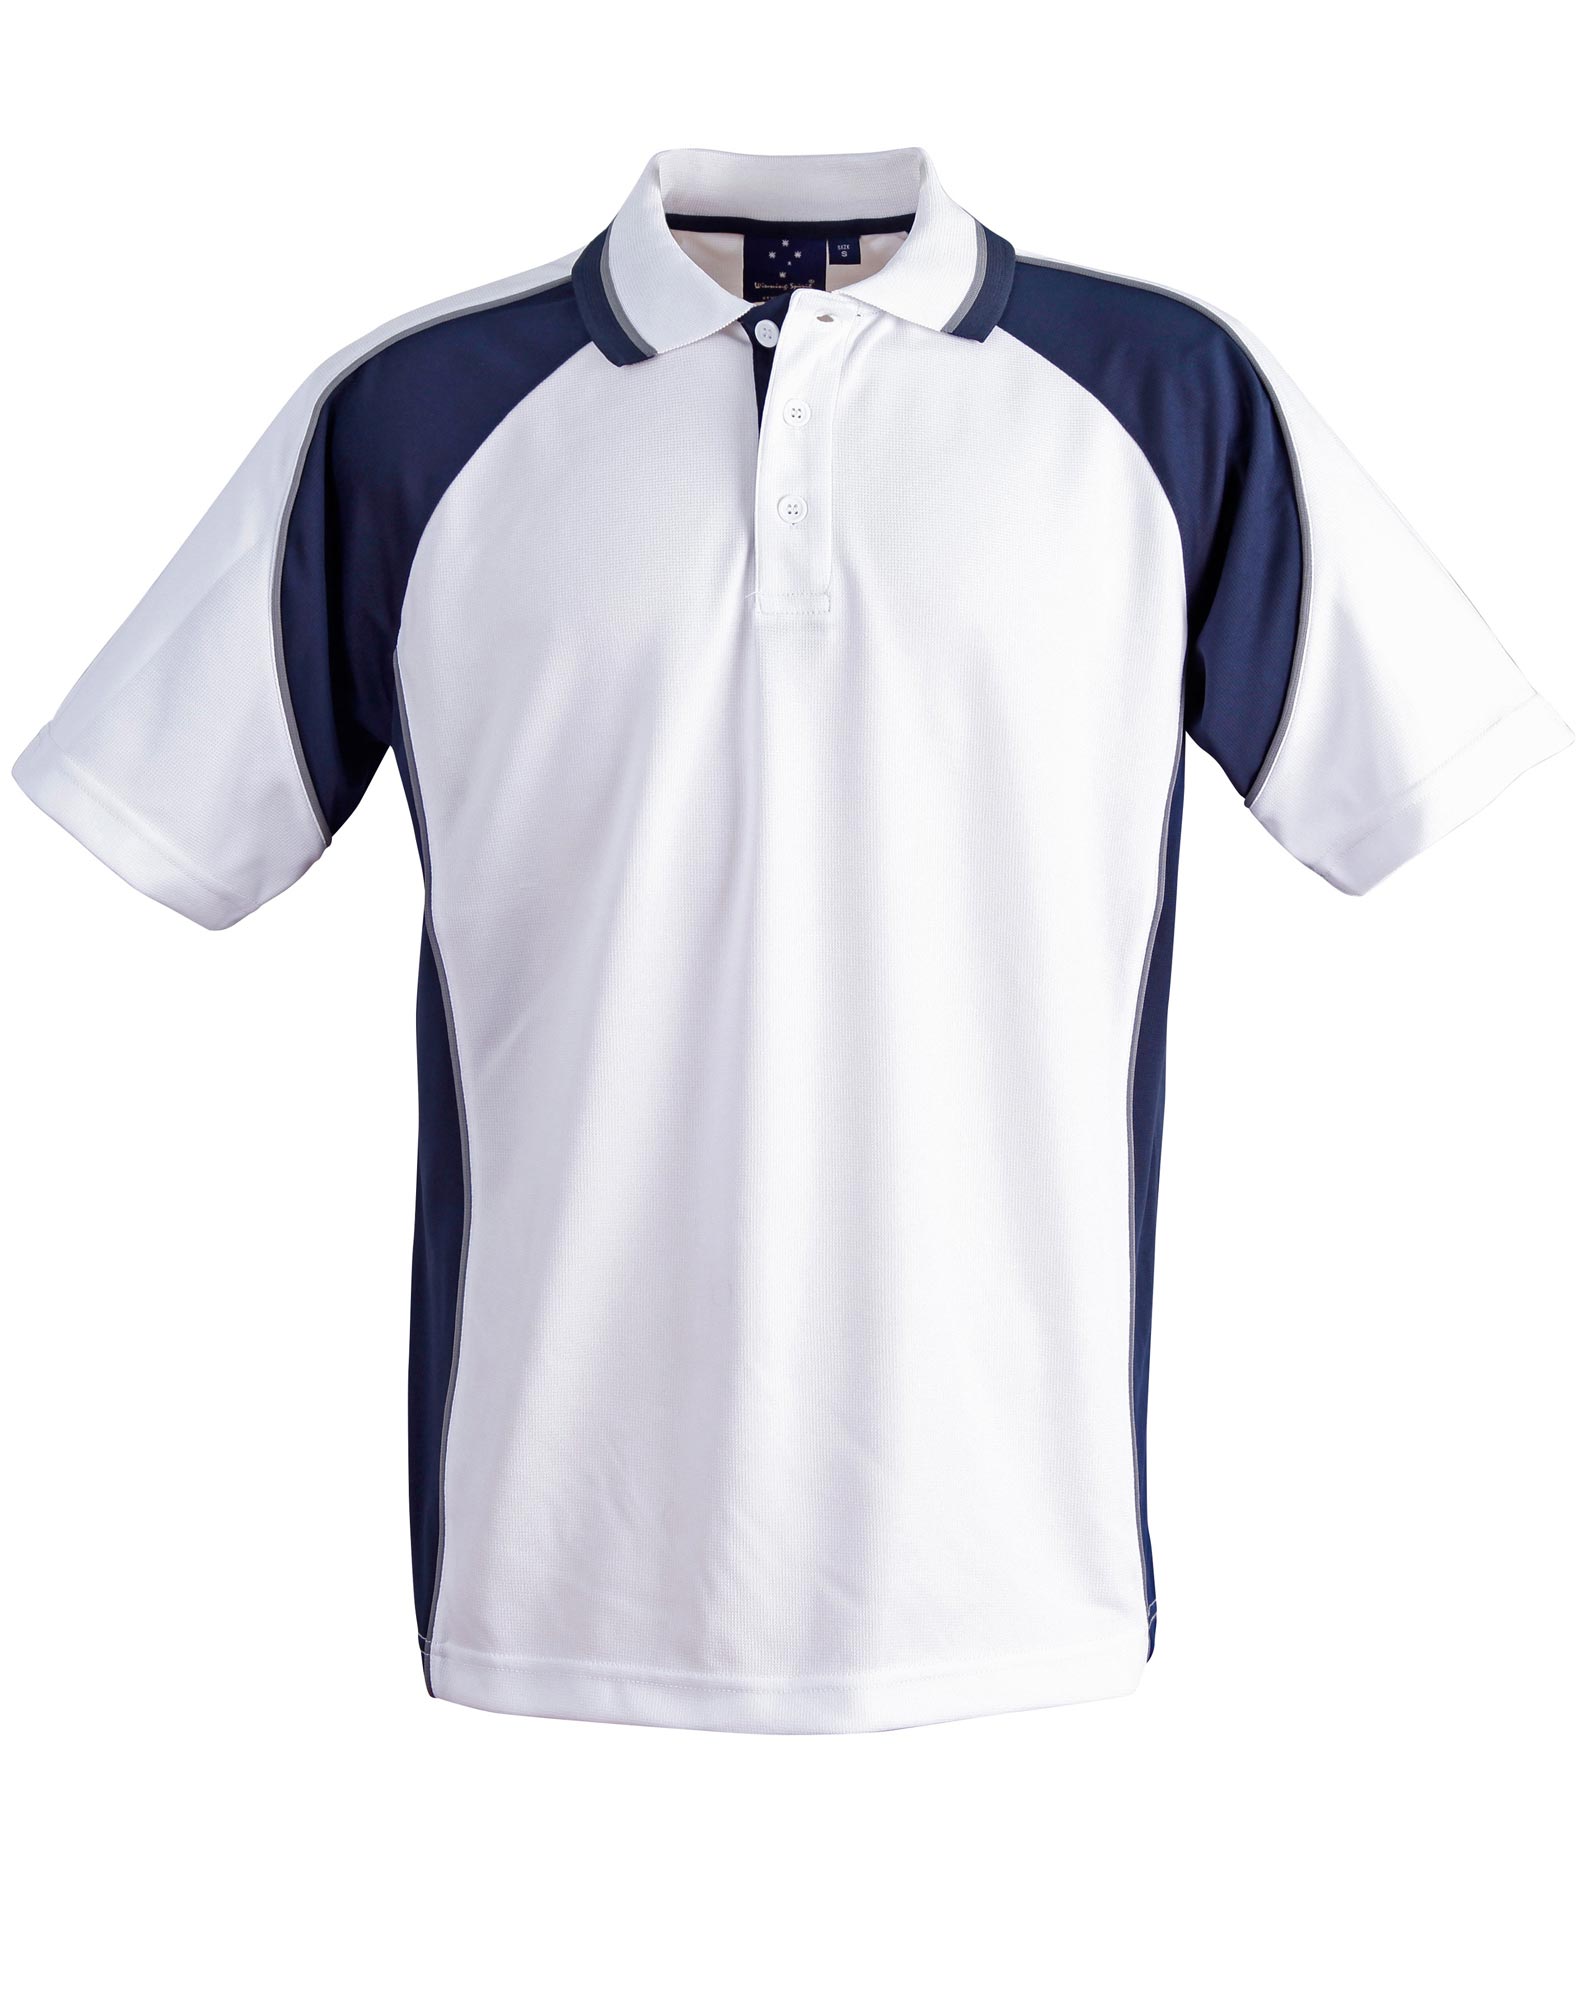 Custom (White Navy) Mascot Sublimated Polo Shirts Online Perth Australia